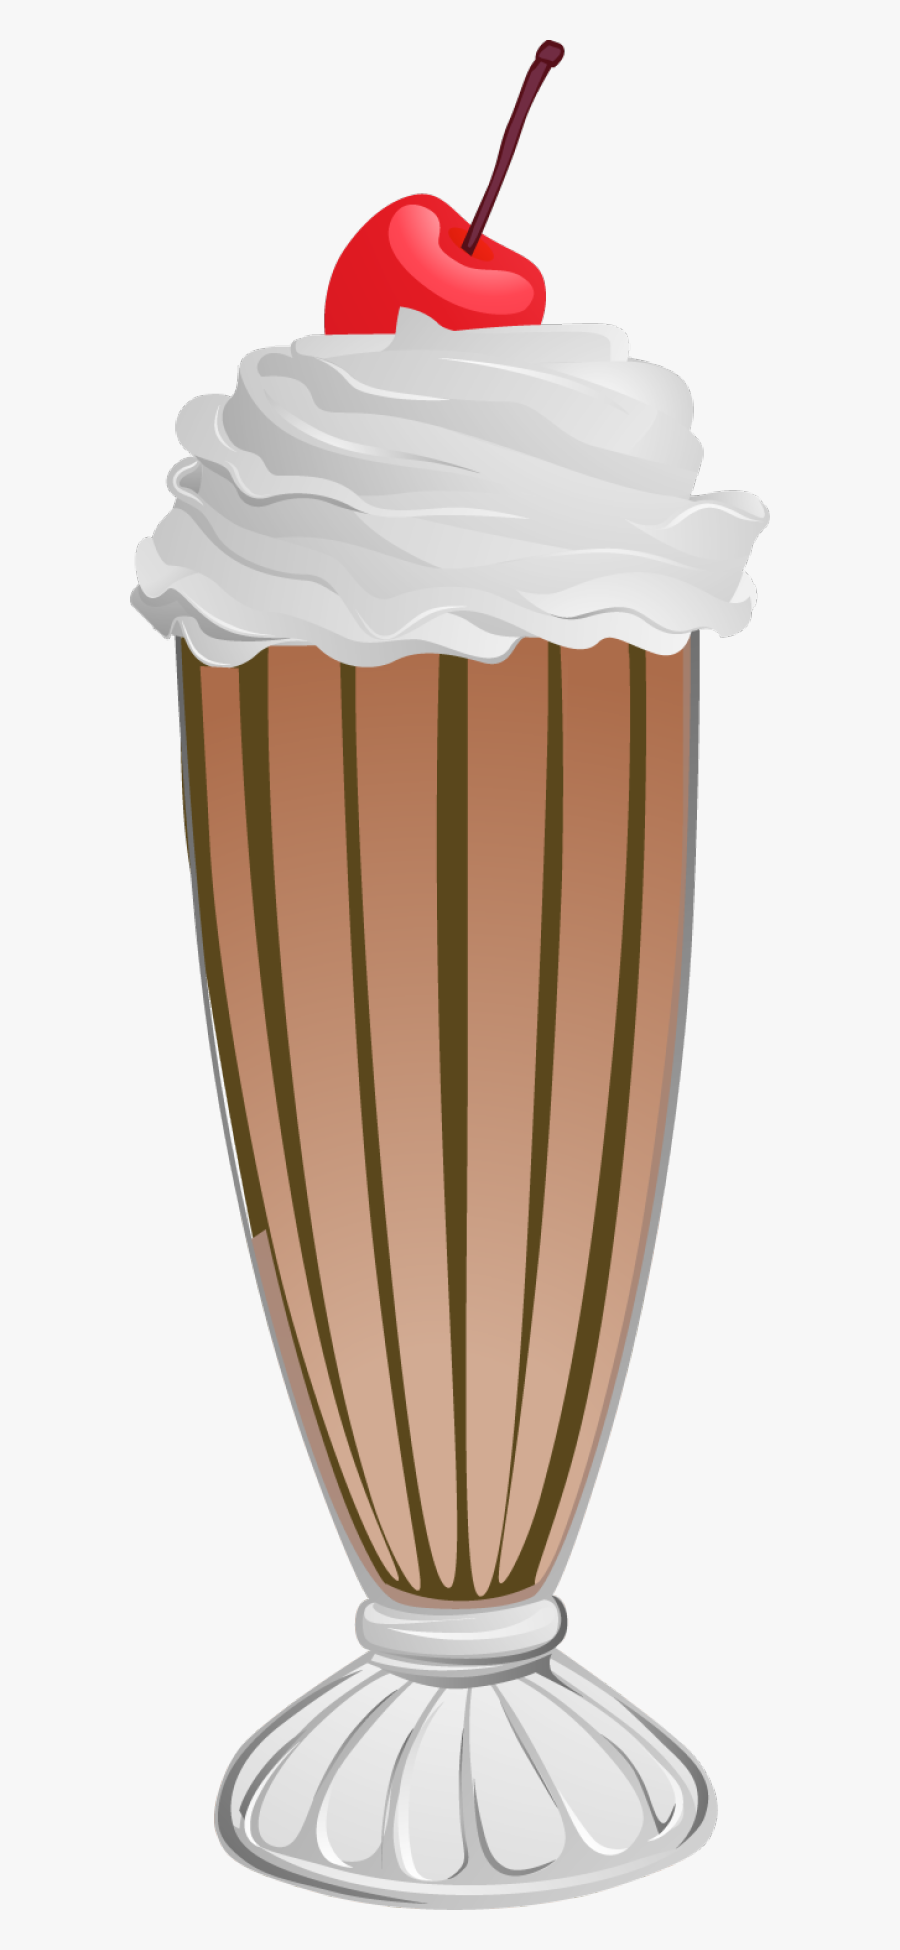 Milkshake Clipart Chocolate Milkshake - Chocolate Shake Clip Art, Transparent Clipart